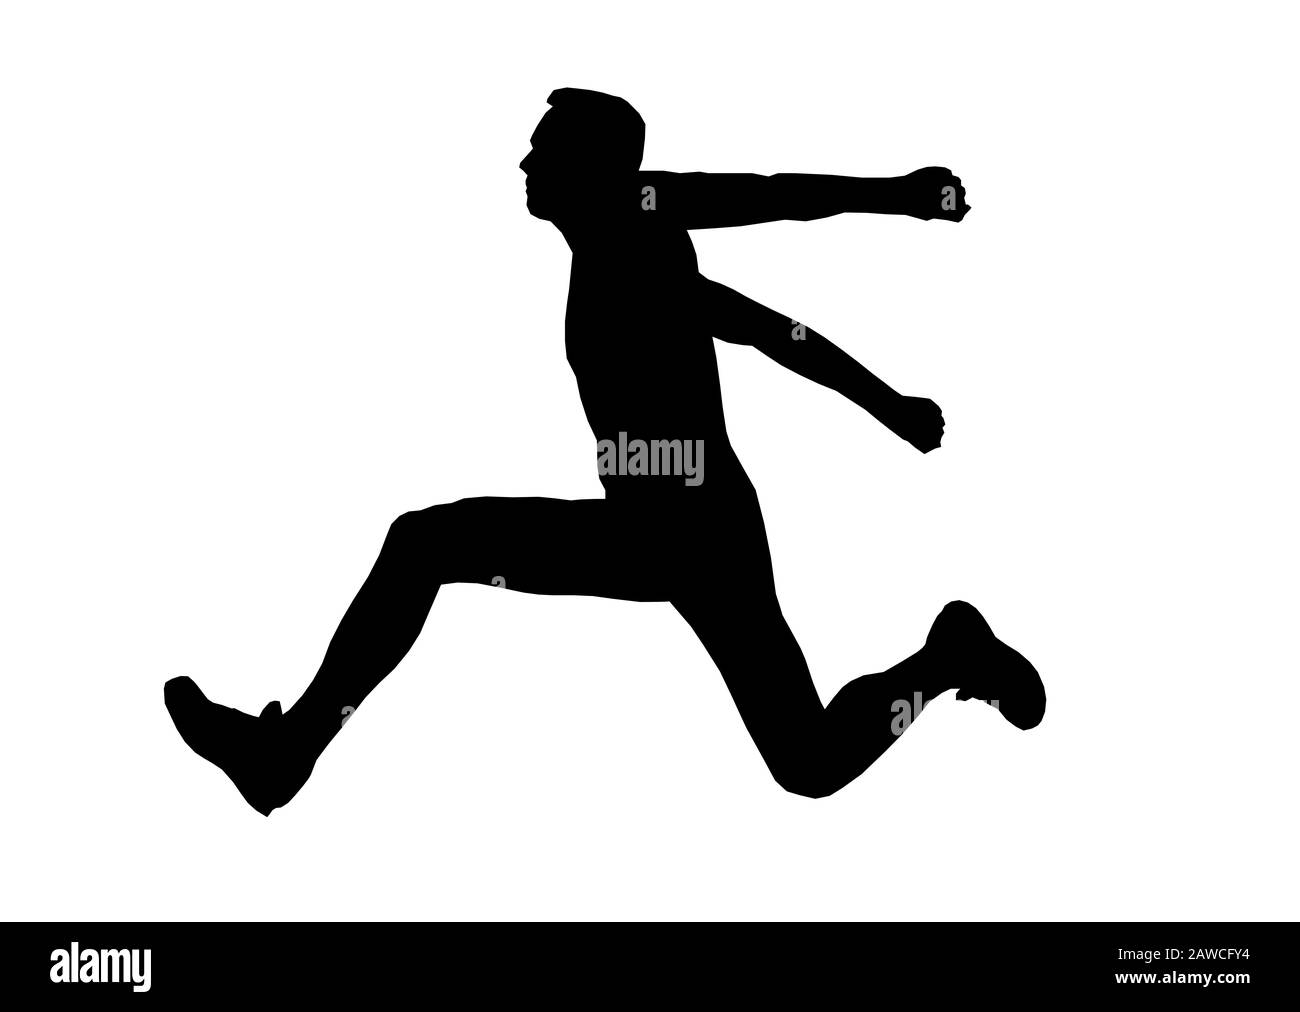 men athlete jumper in triple jump black silhouette Stock Photo